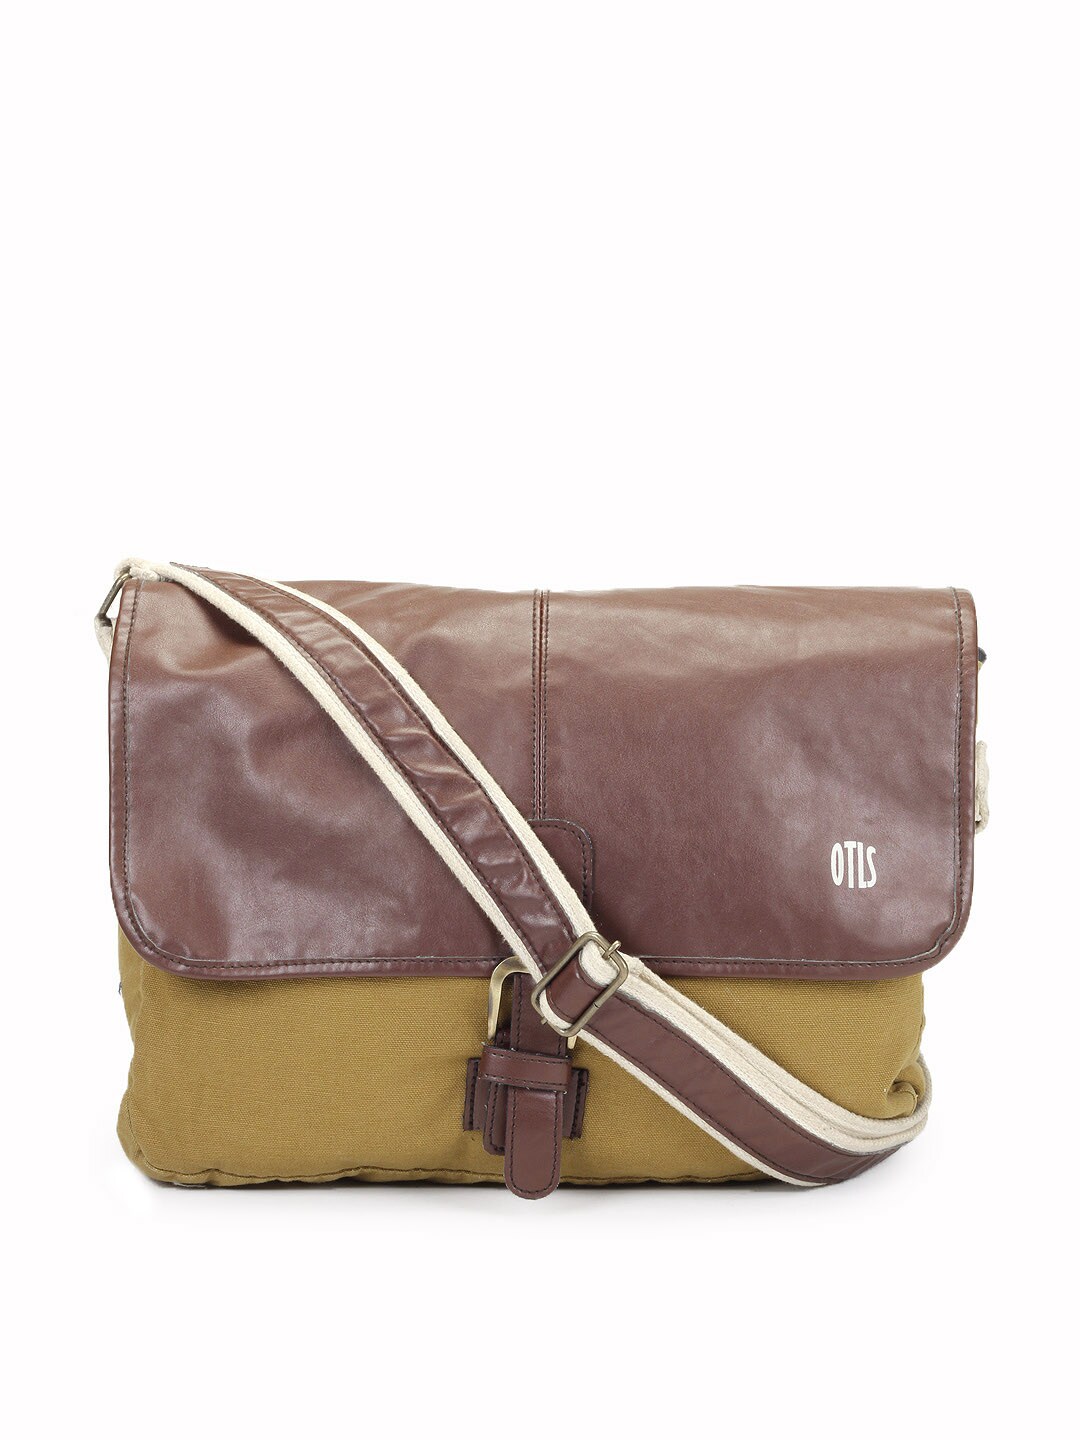 OTLS Unisex Mustard Brown Messenger Bag